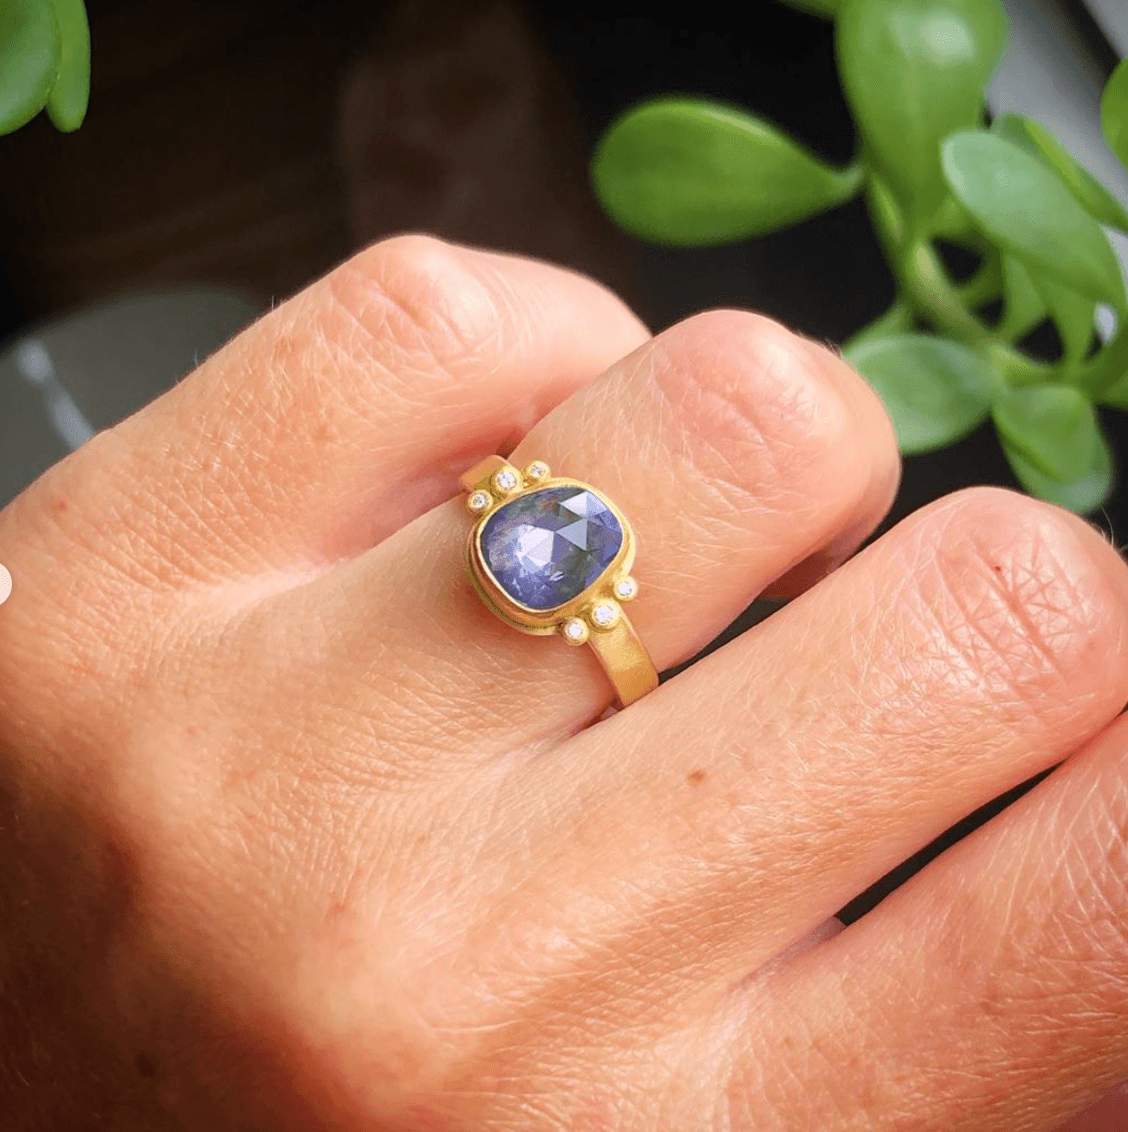 Pink Sapphire Necklace with Diamond – Ananda Khalsa